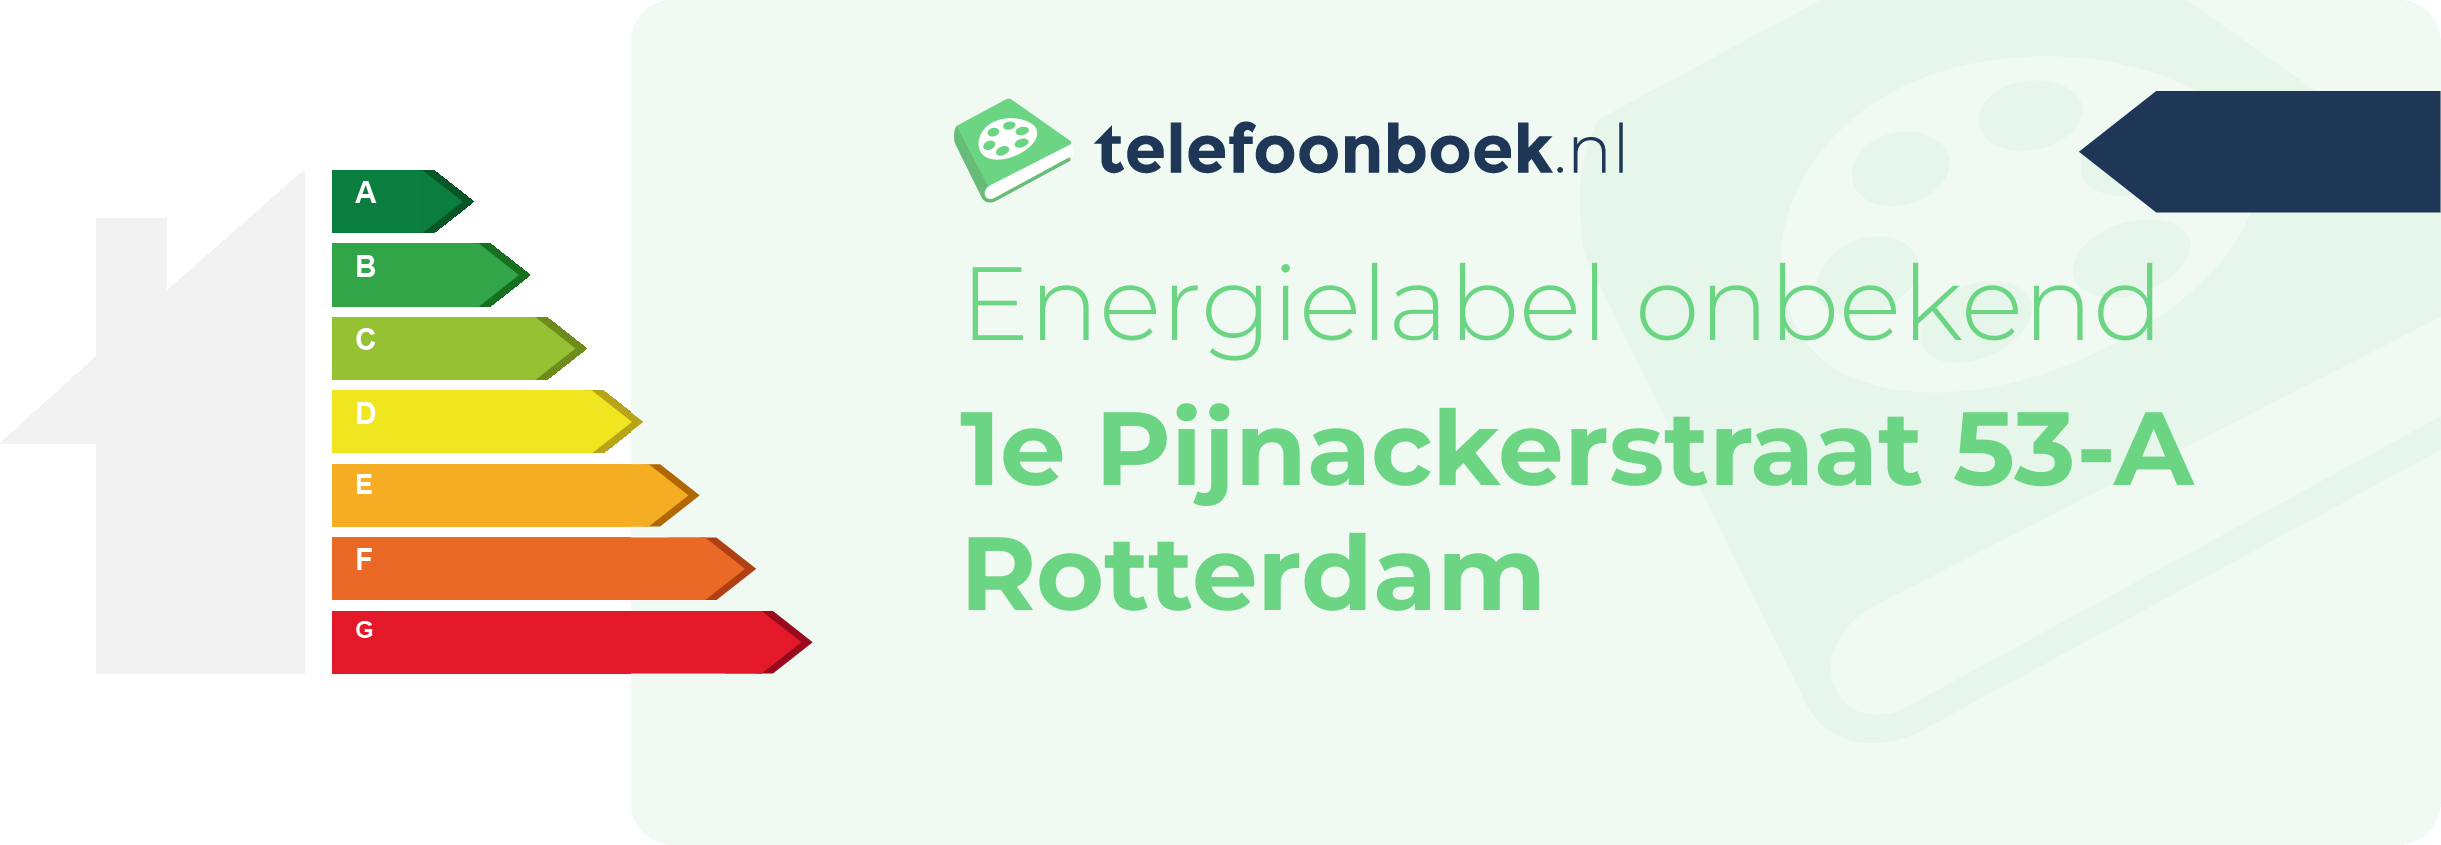 Energielabel 1e Pijnackerstraat 53-A Rotterdam